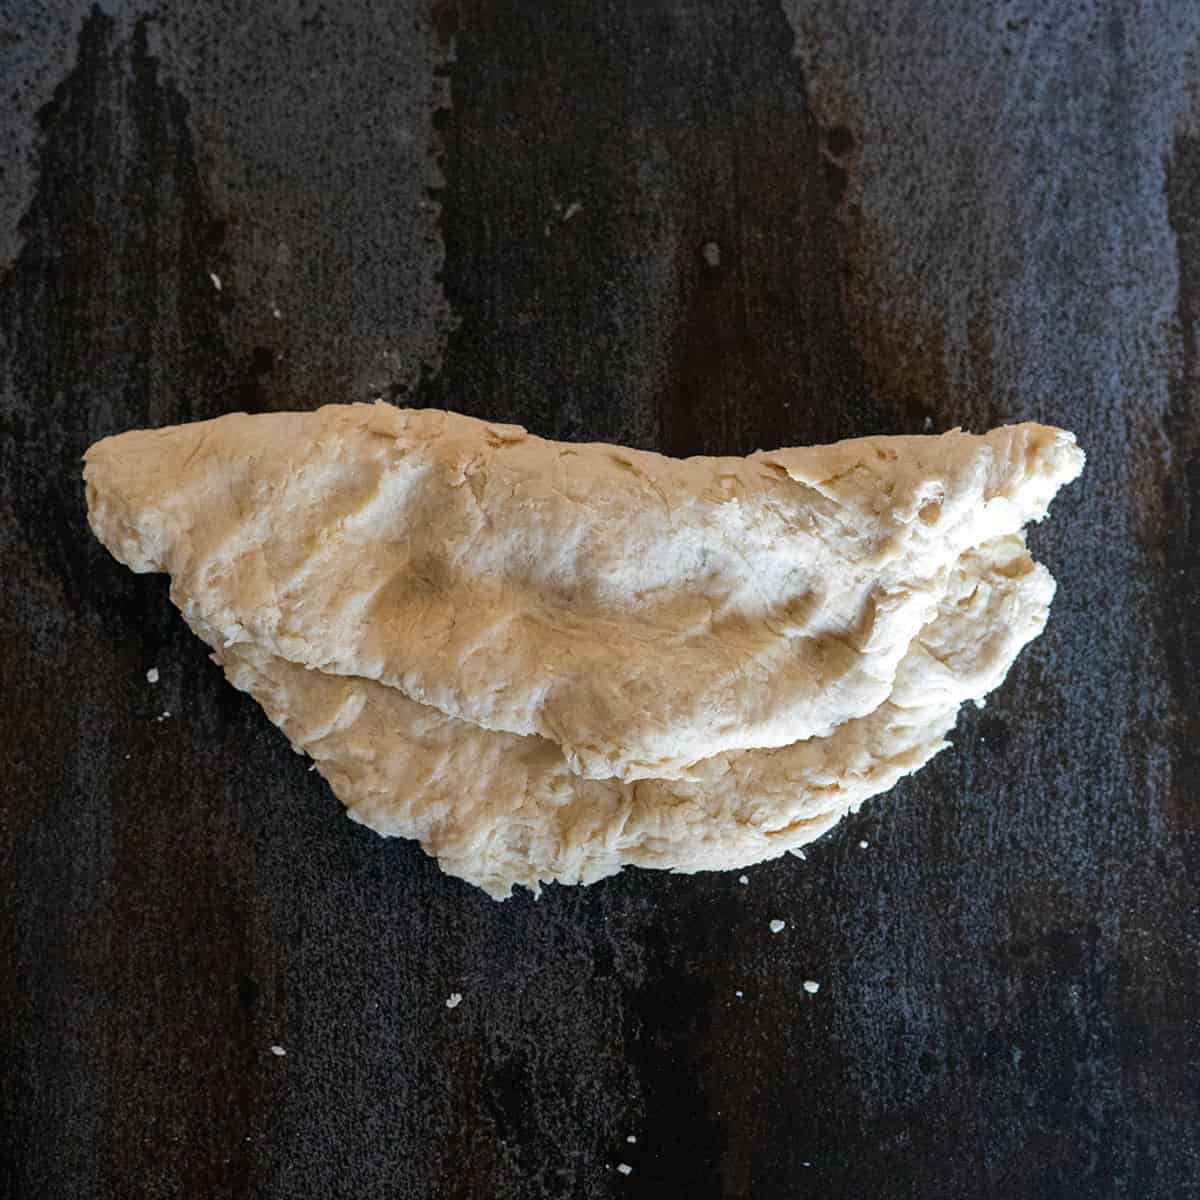 folding flattened tortilla dough in half.